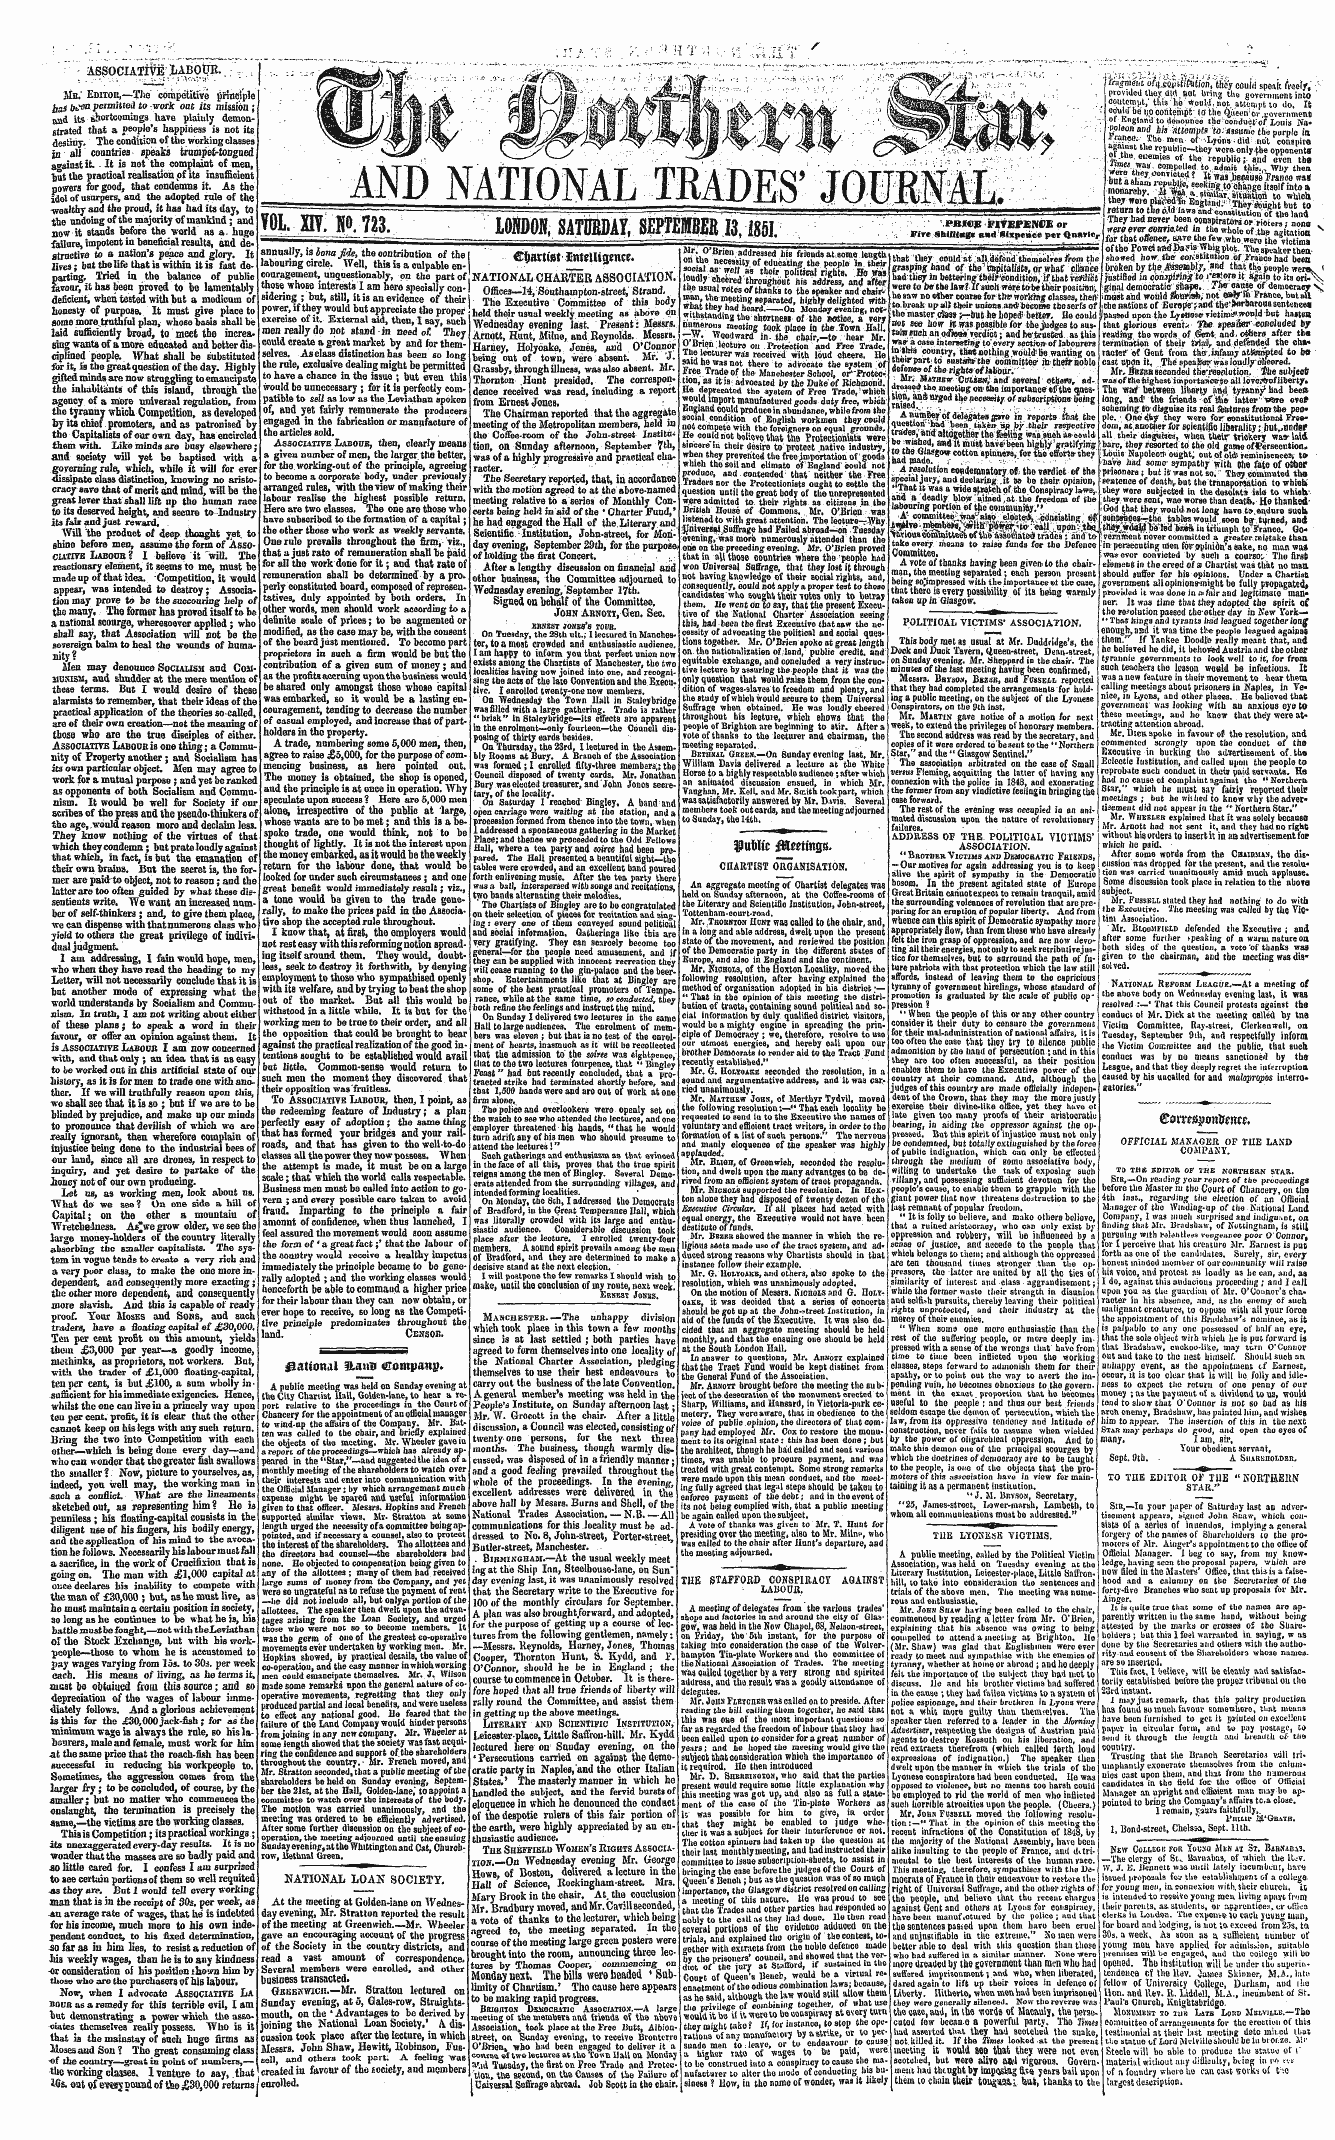 Northern Star (1837-1852): jS F Y, 2nd edition - Mltc Fttfftmgs.